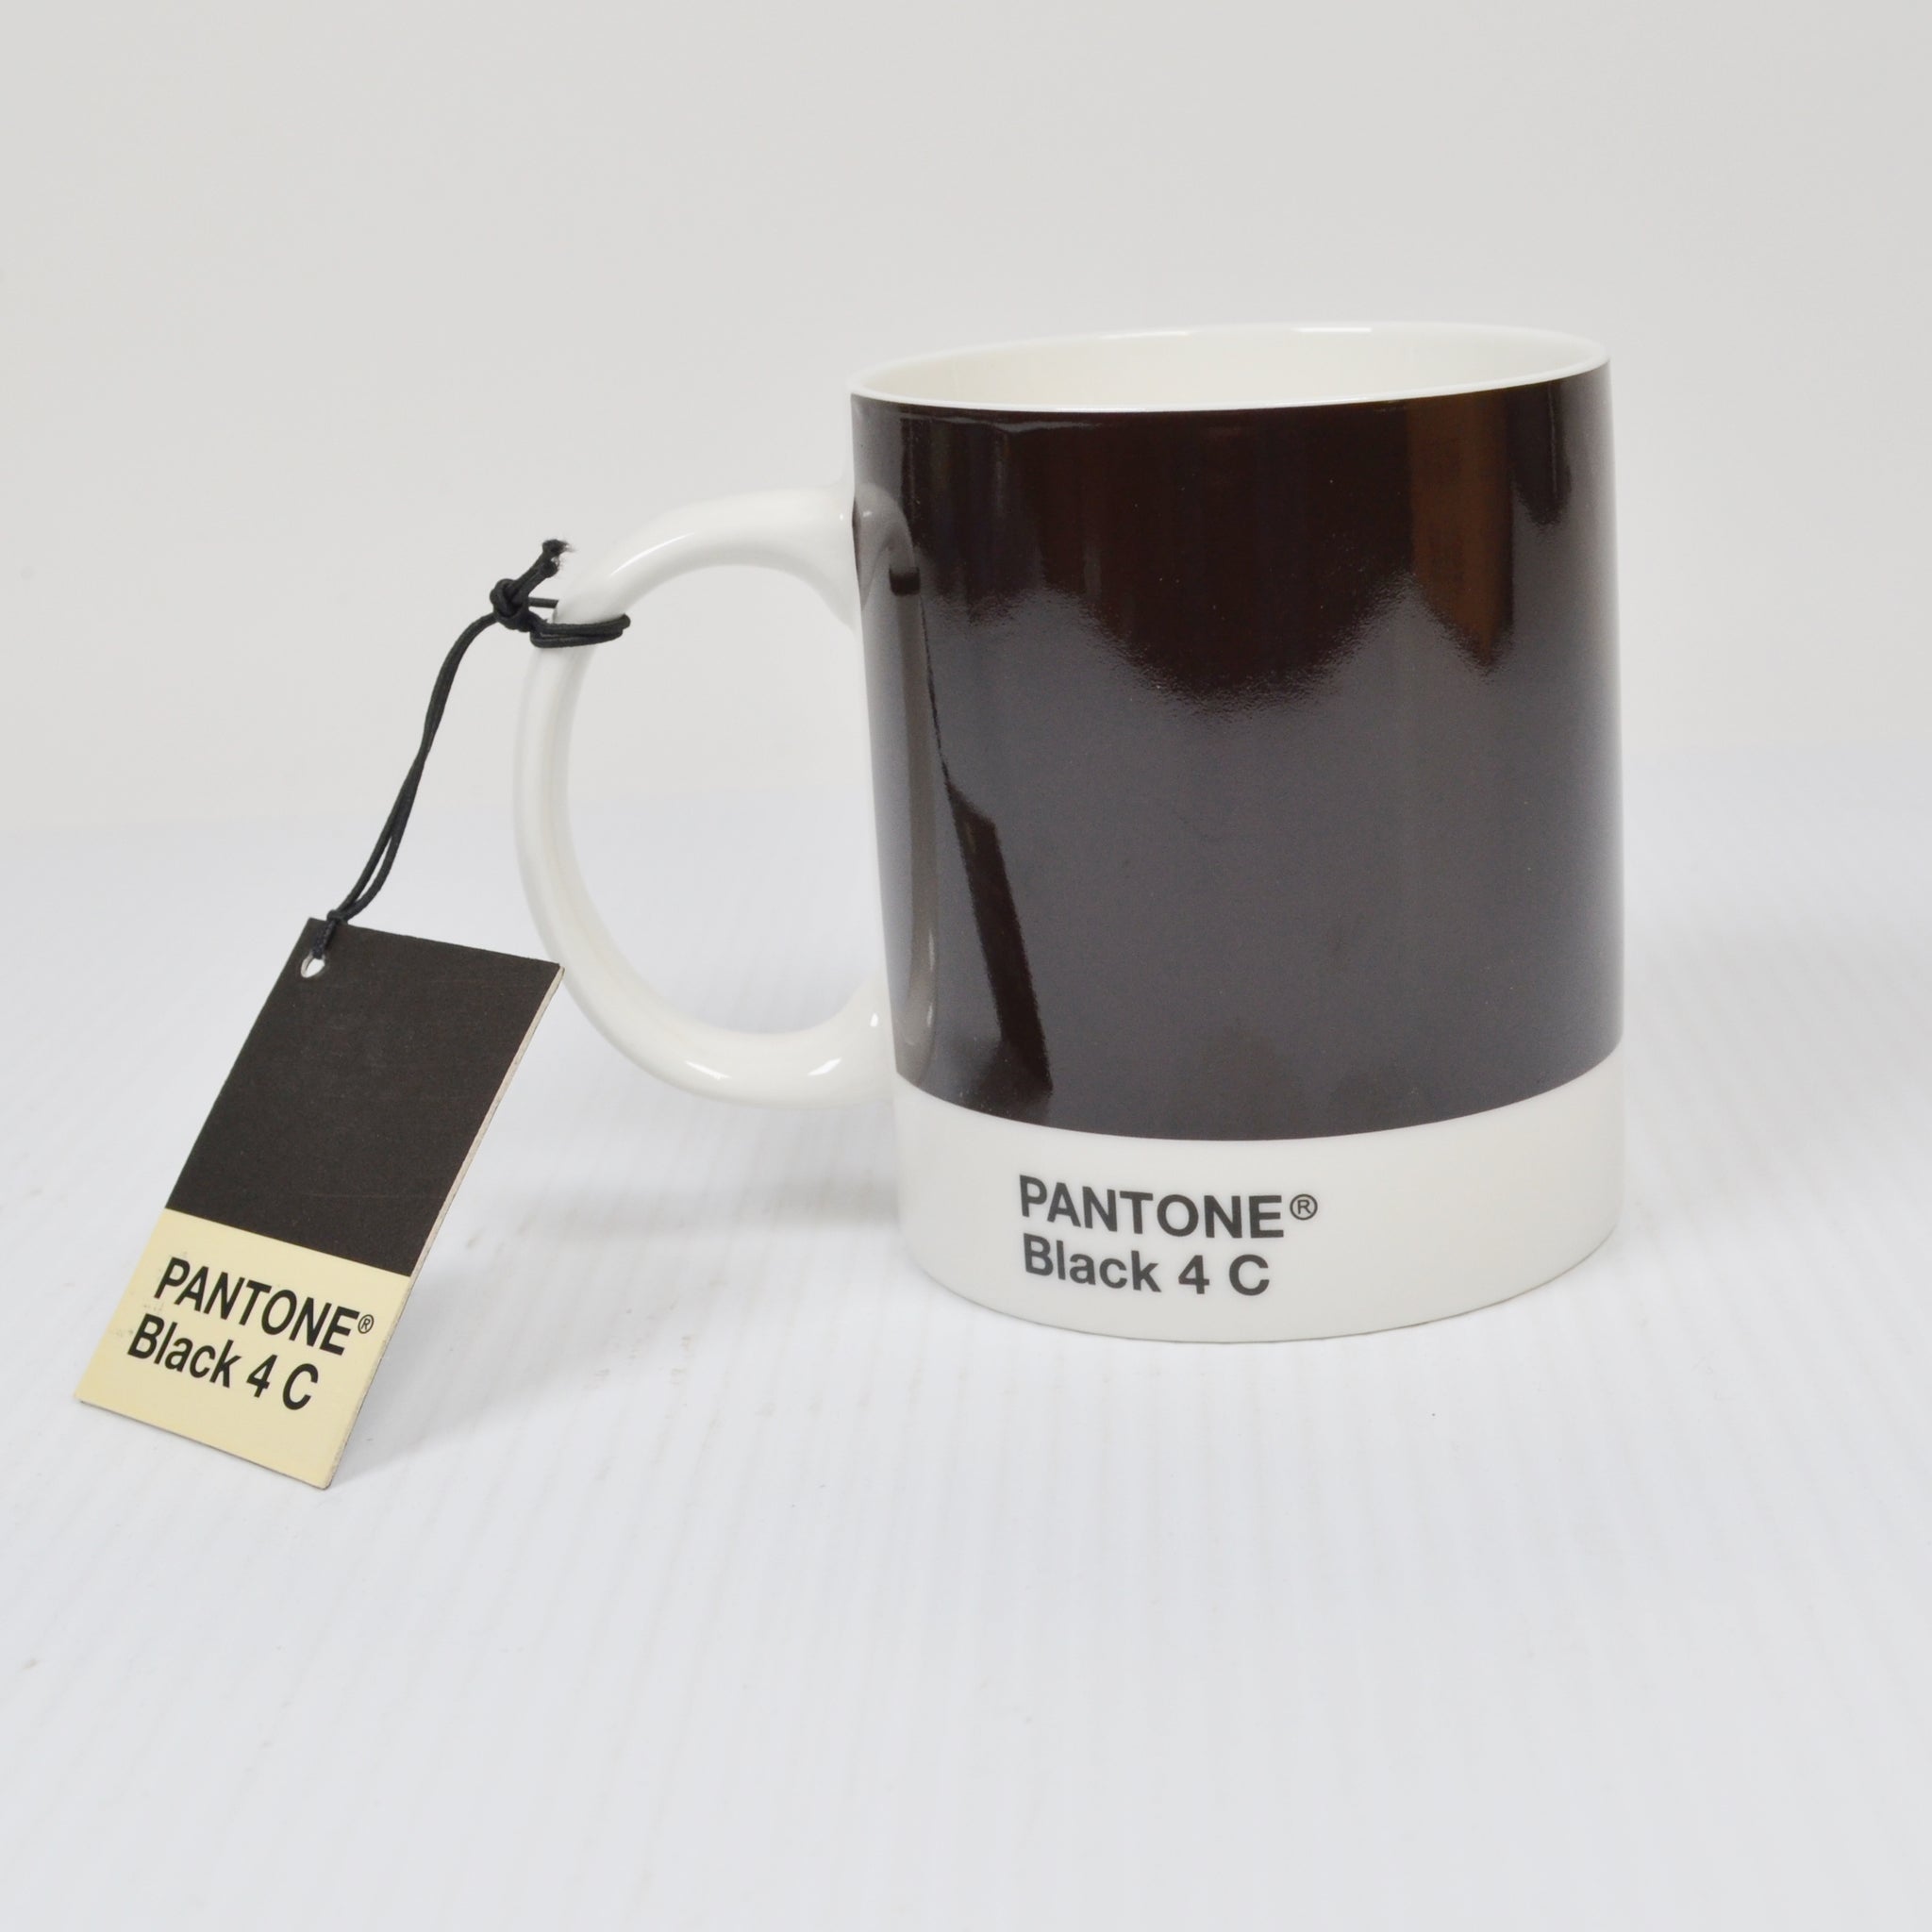 Pantone Coffee Mug - Black 4 C - Black As Night - London Taxi - NEW